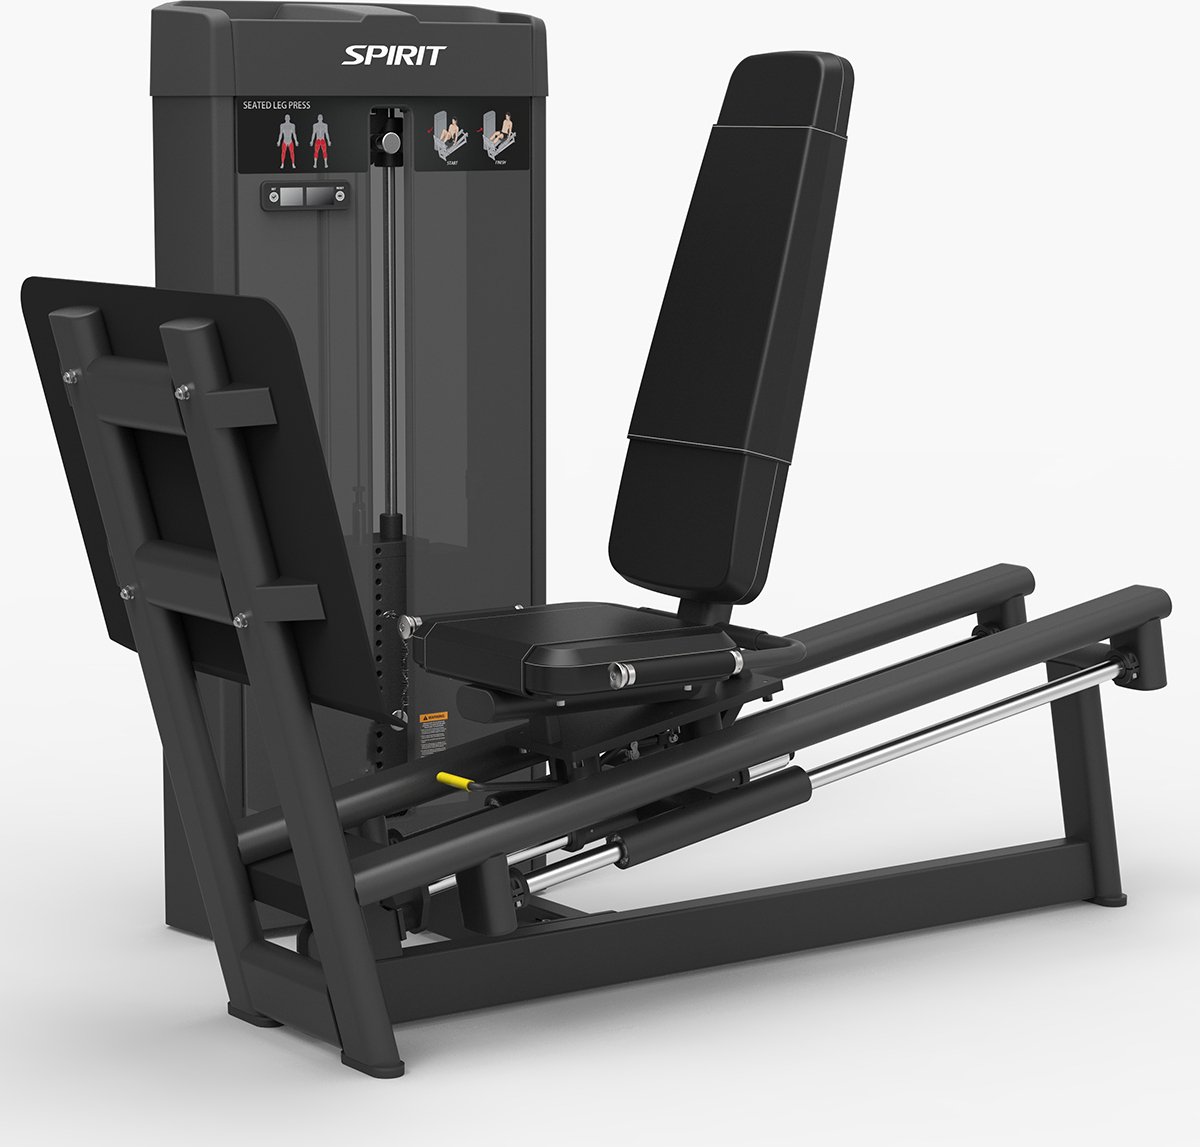 Spirit Fitness SP-4311 - Seated Leg Press Machine - Steekgewichten (150 KG gewichtstapel) - Professioneel gebruik - Ruimtebesparend ontwerp - Geïntegreerde rep-teller - Volledig verstelbaar